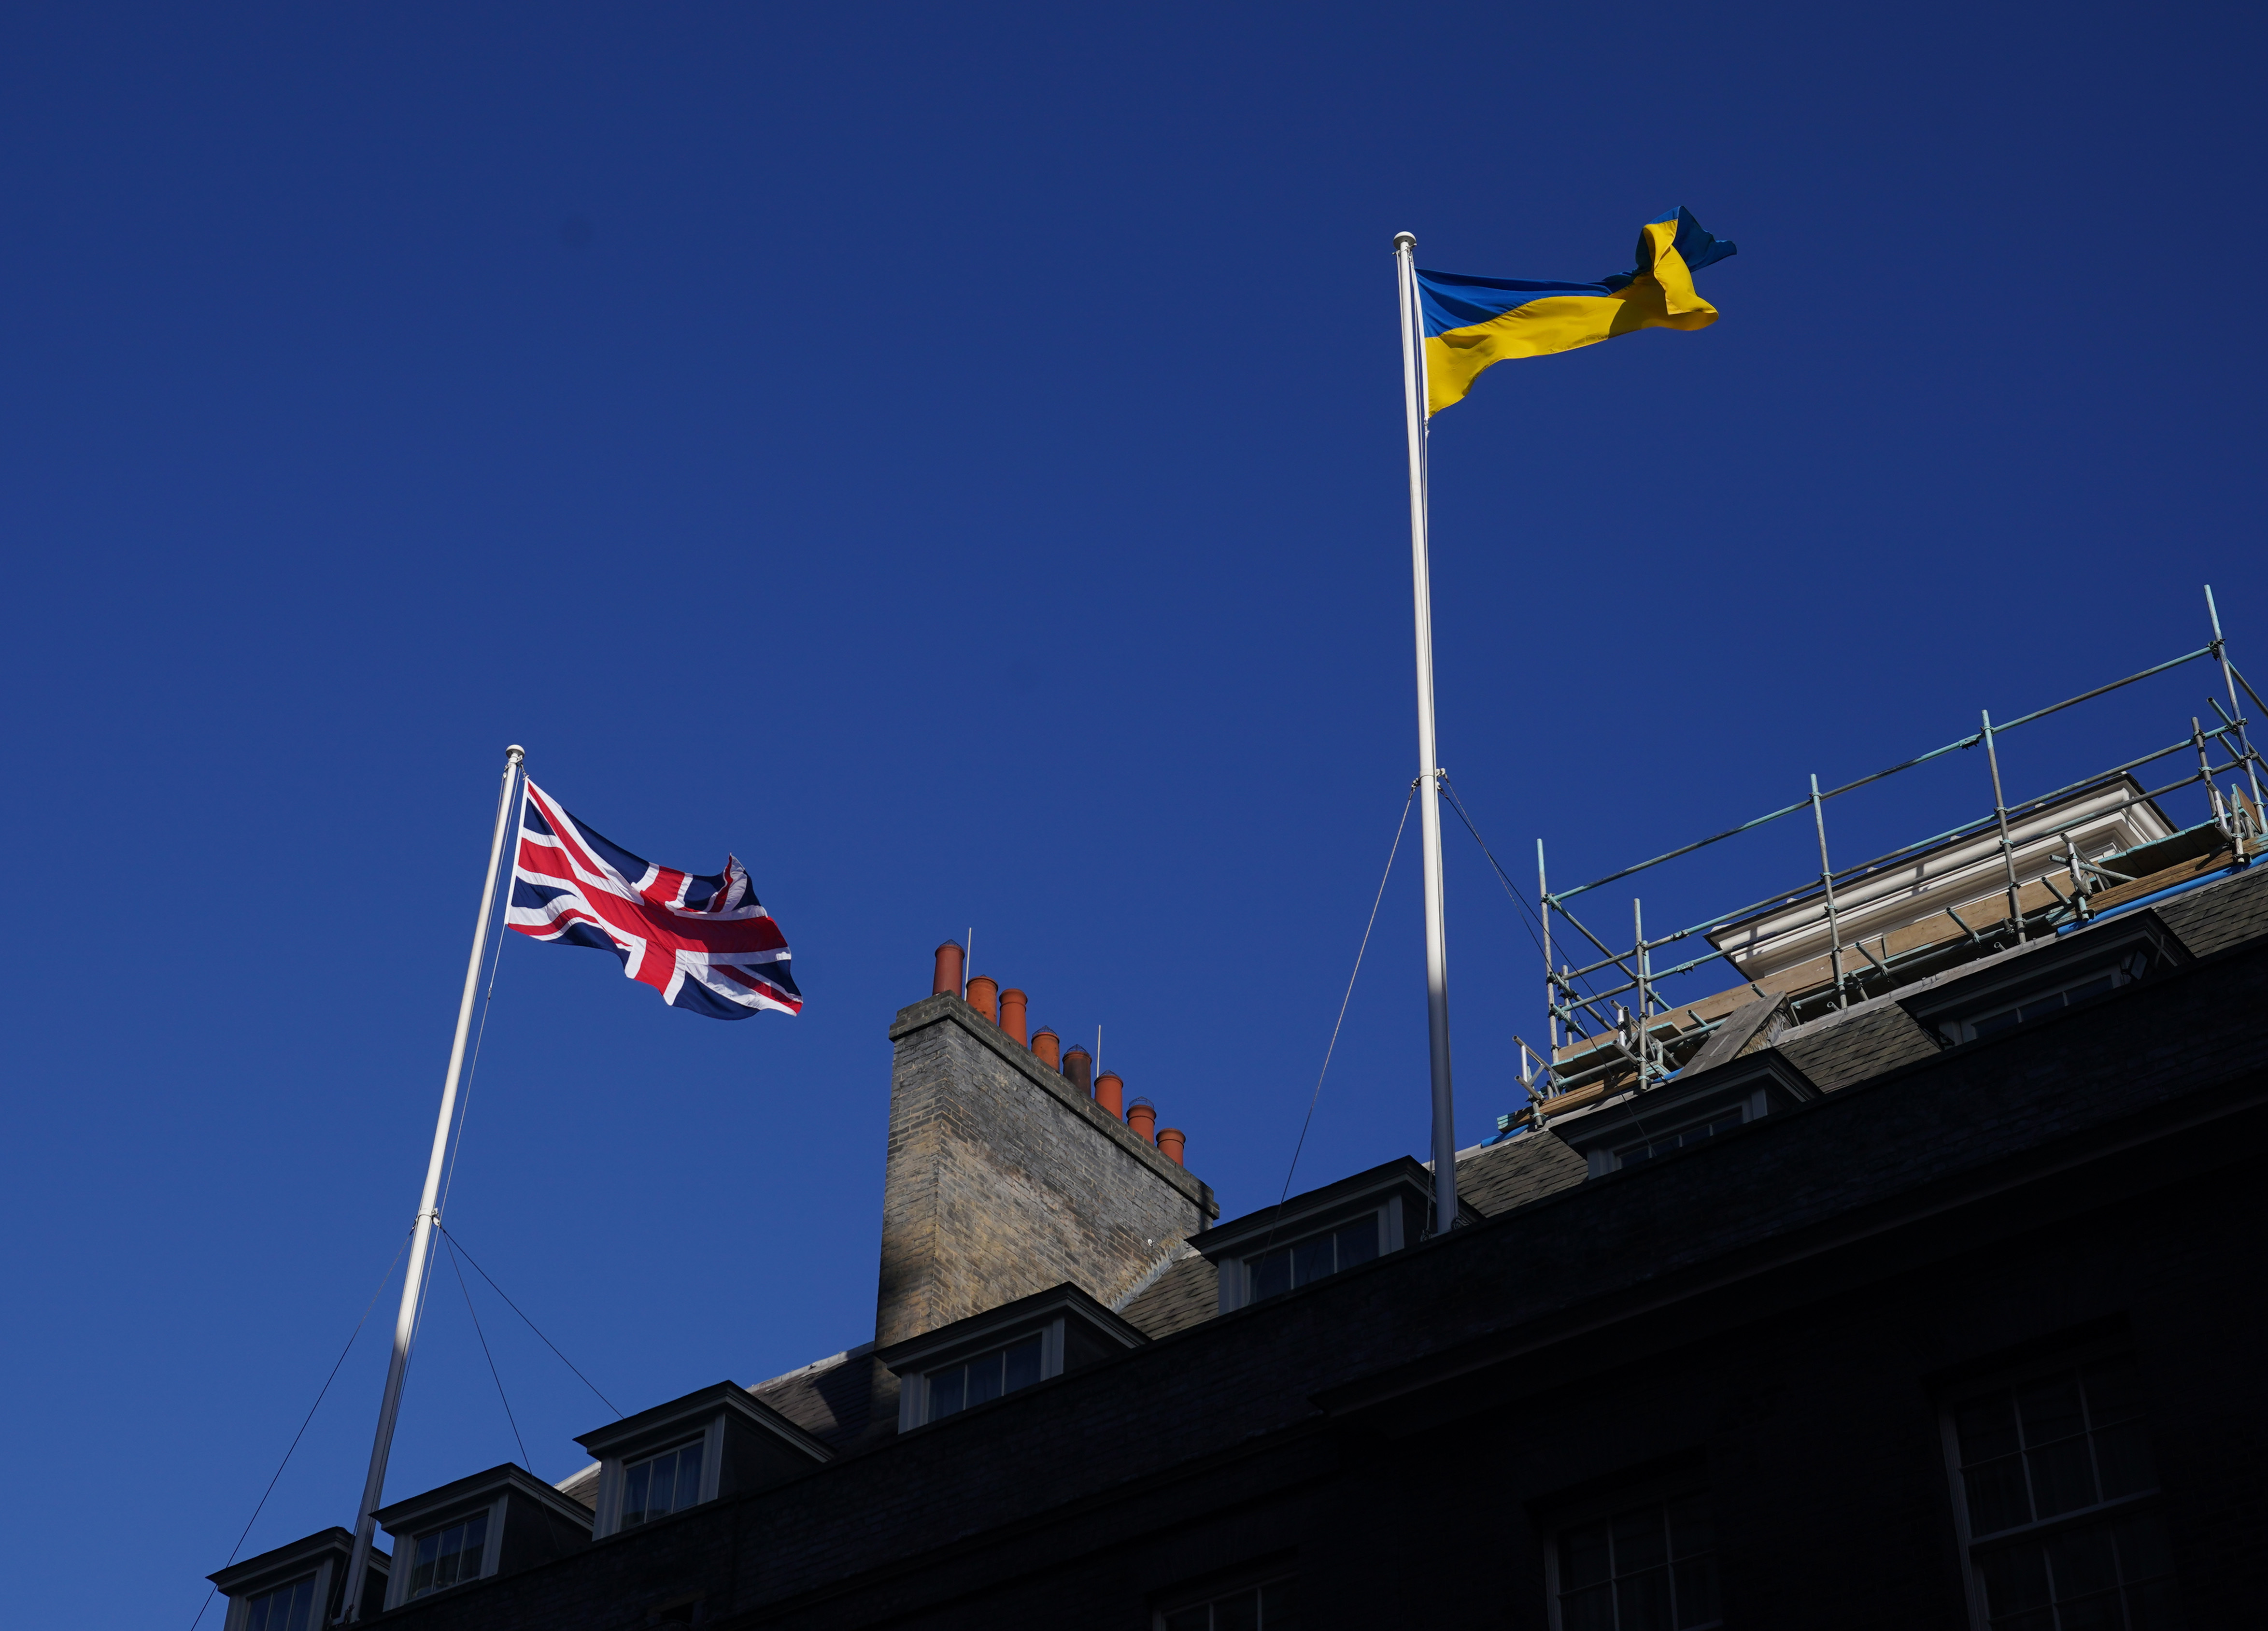 The Ukrainian flag flying above 10 Downing Street